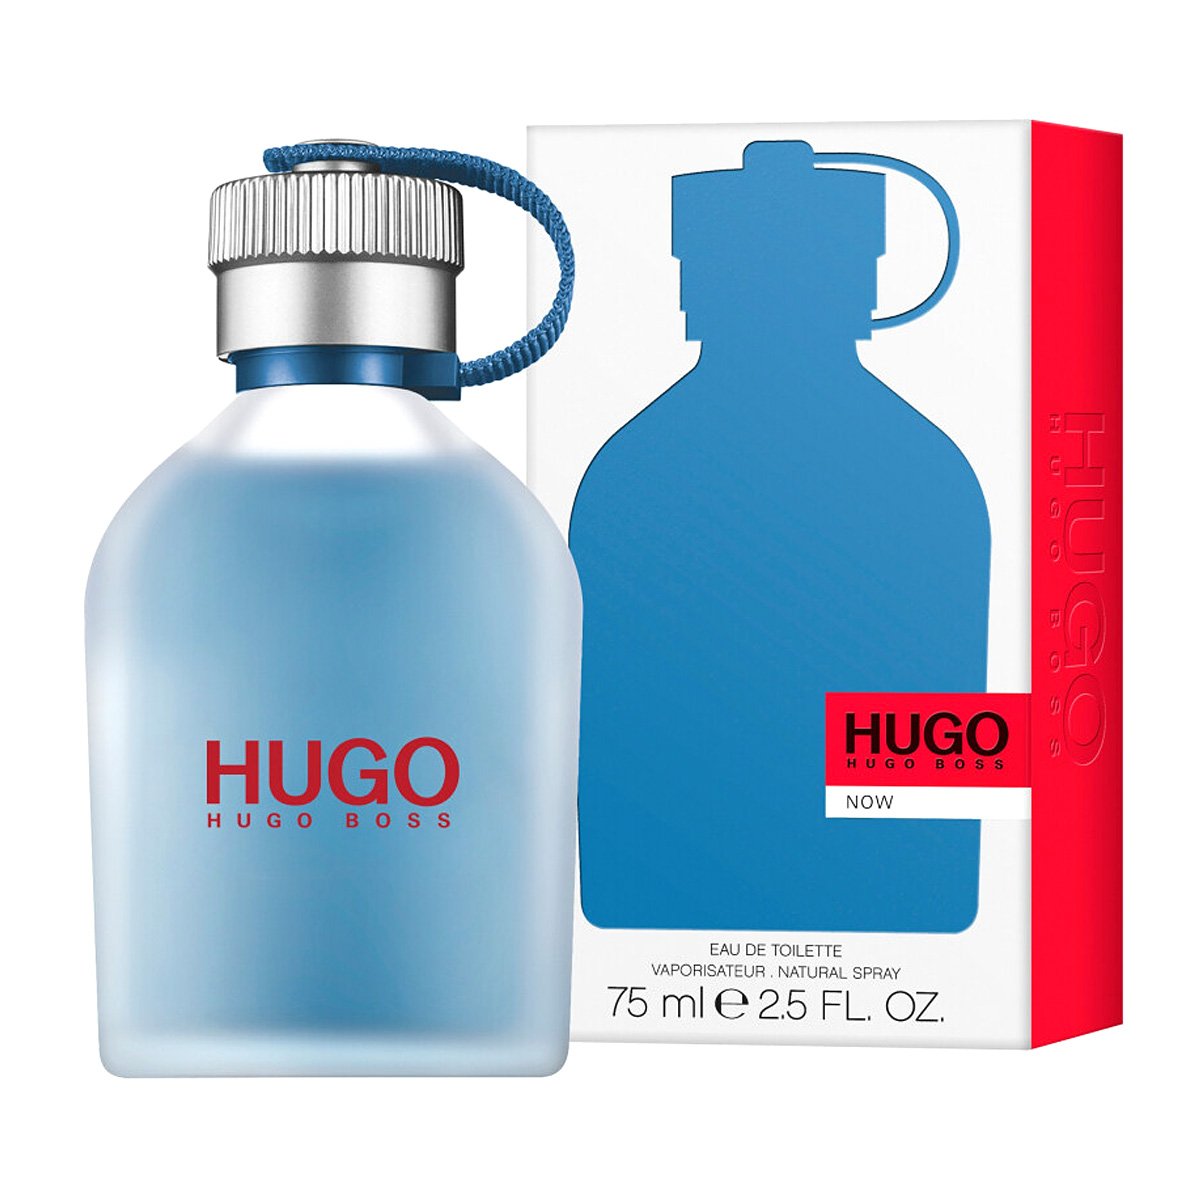 Hugo на русском. Hugo Boss Now 75ml. Hugo Boss Hugo Now [m] EDT - 75ml. Boss Hugo Boss man EDT 125ml (m). Hugo Boss мужской Hugo туалетная вода (EDT) 75мл.